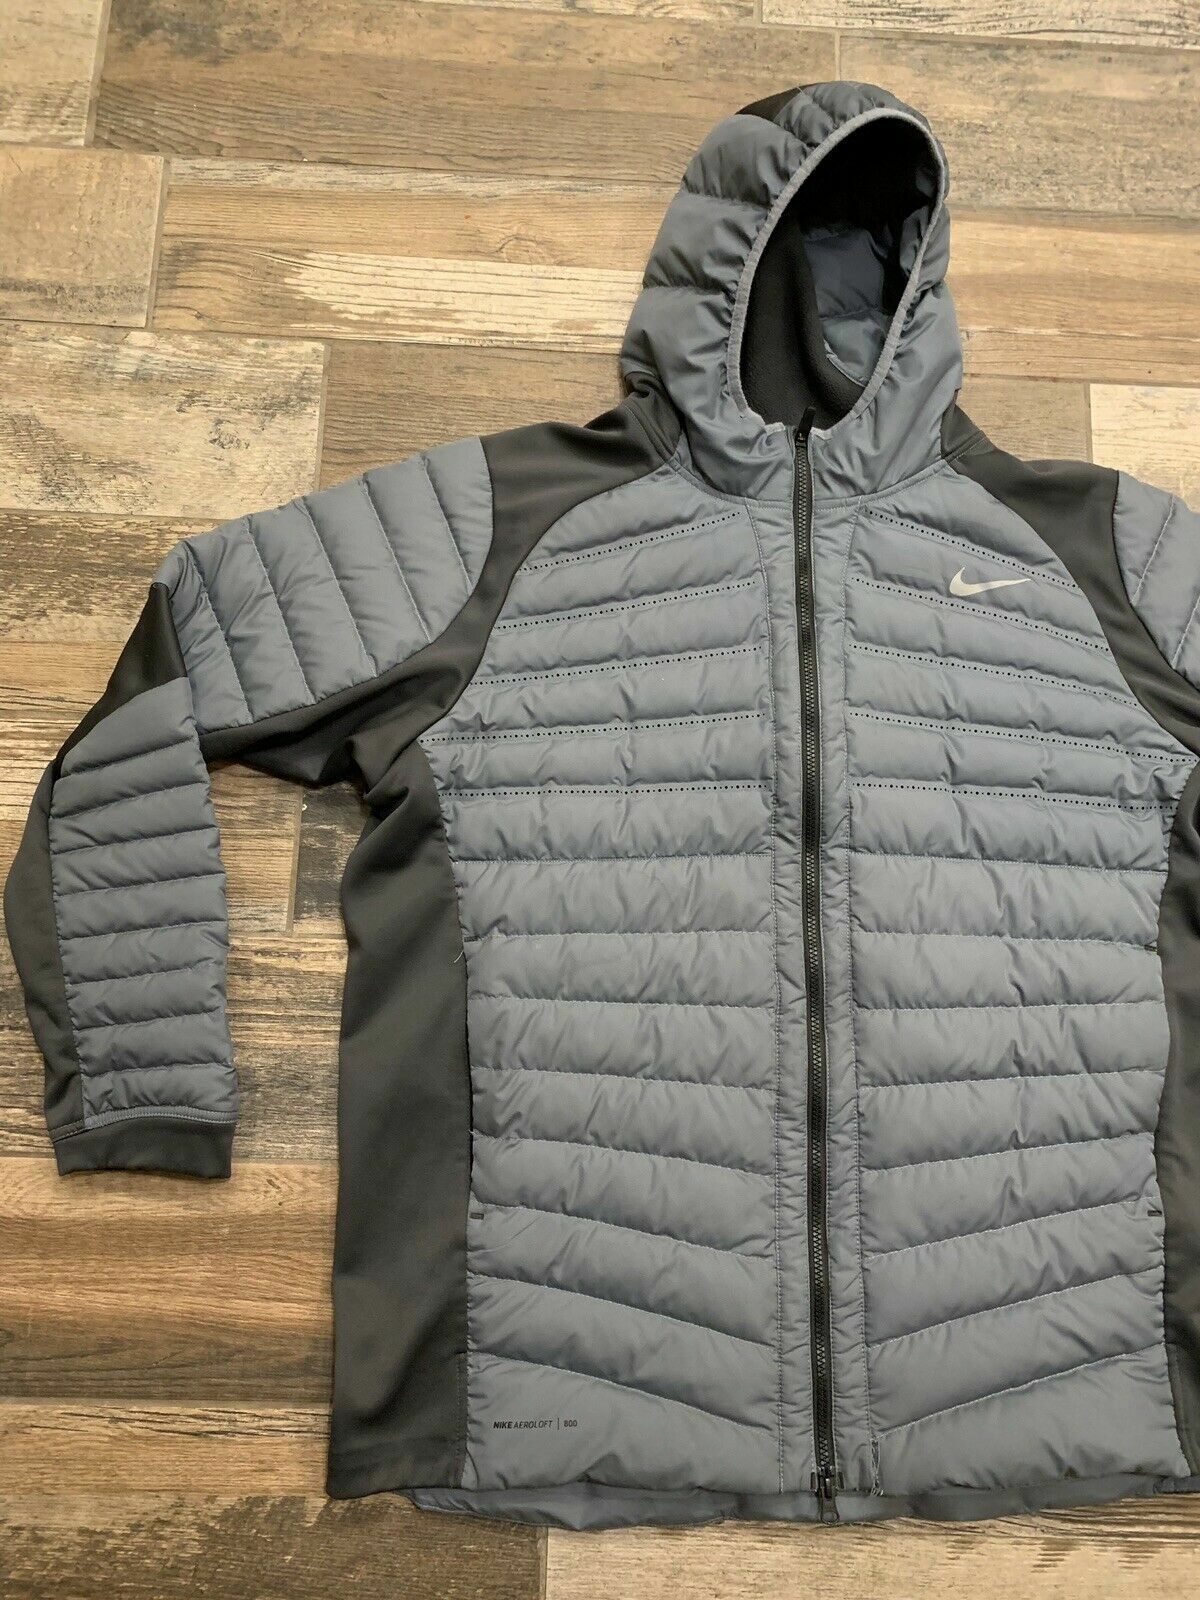 Marco de referencia ola frase $350 Nike Aeroloft 800 Down Fill Hooded Jacket Gray Grey 916641-065 Mens  Small S | eBay